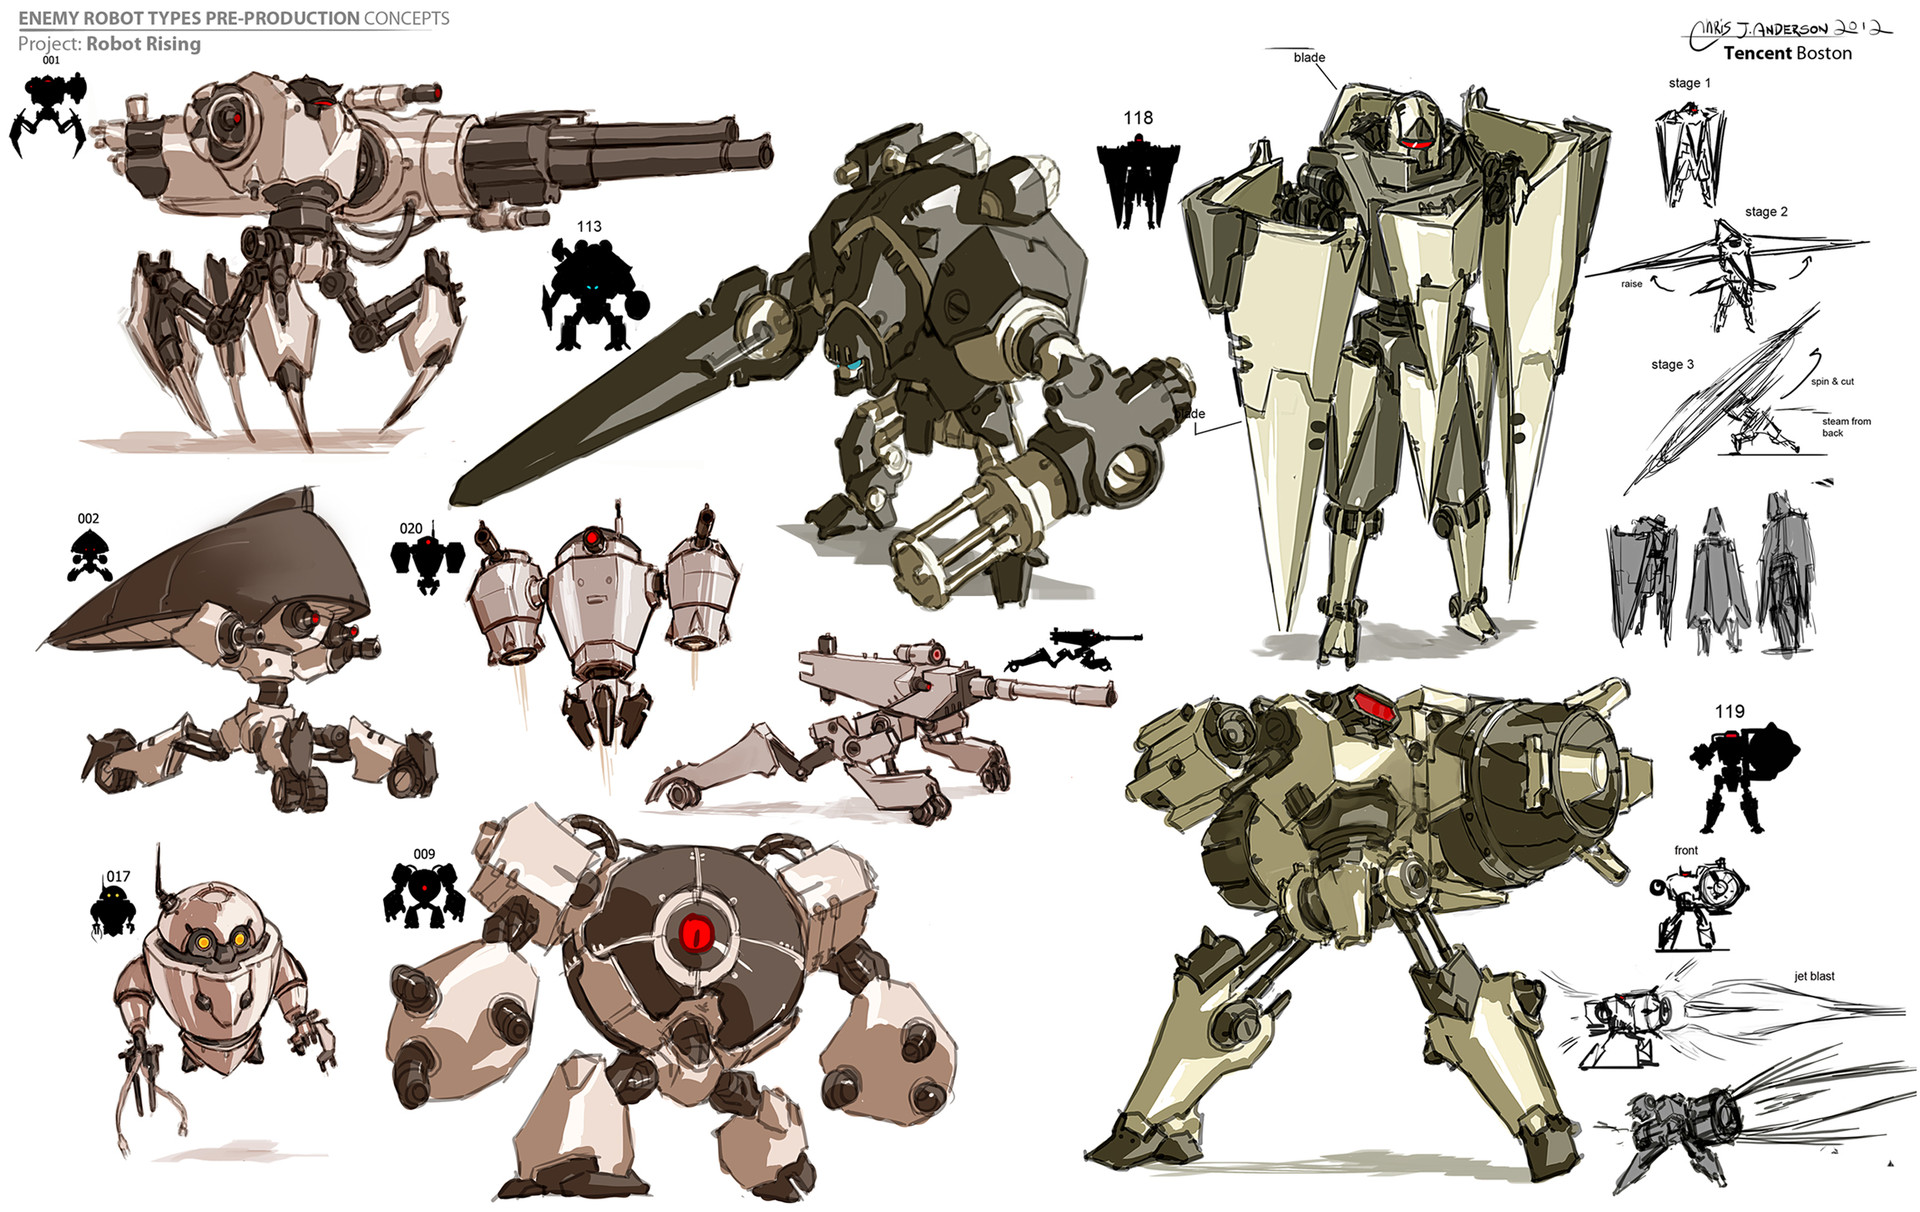 chris-anderson-05-enemy-robot-types-prep